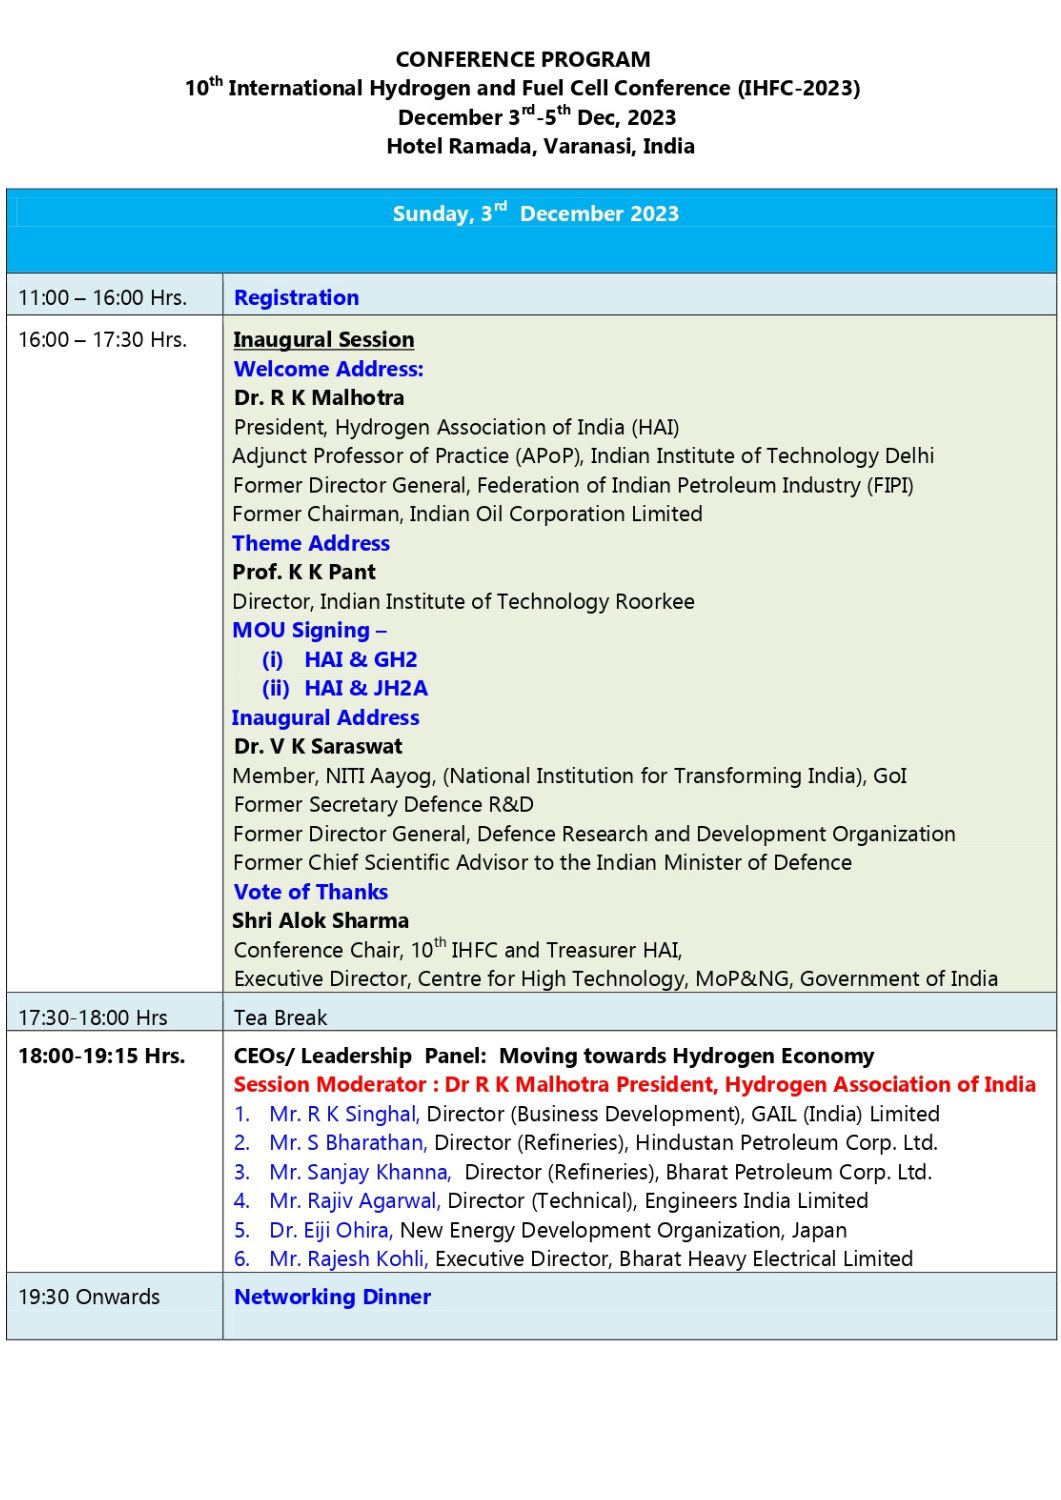 10th international hydrogen & fuel cell conference Program